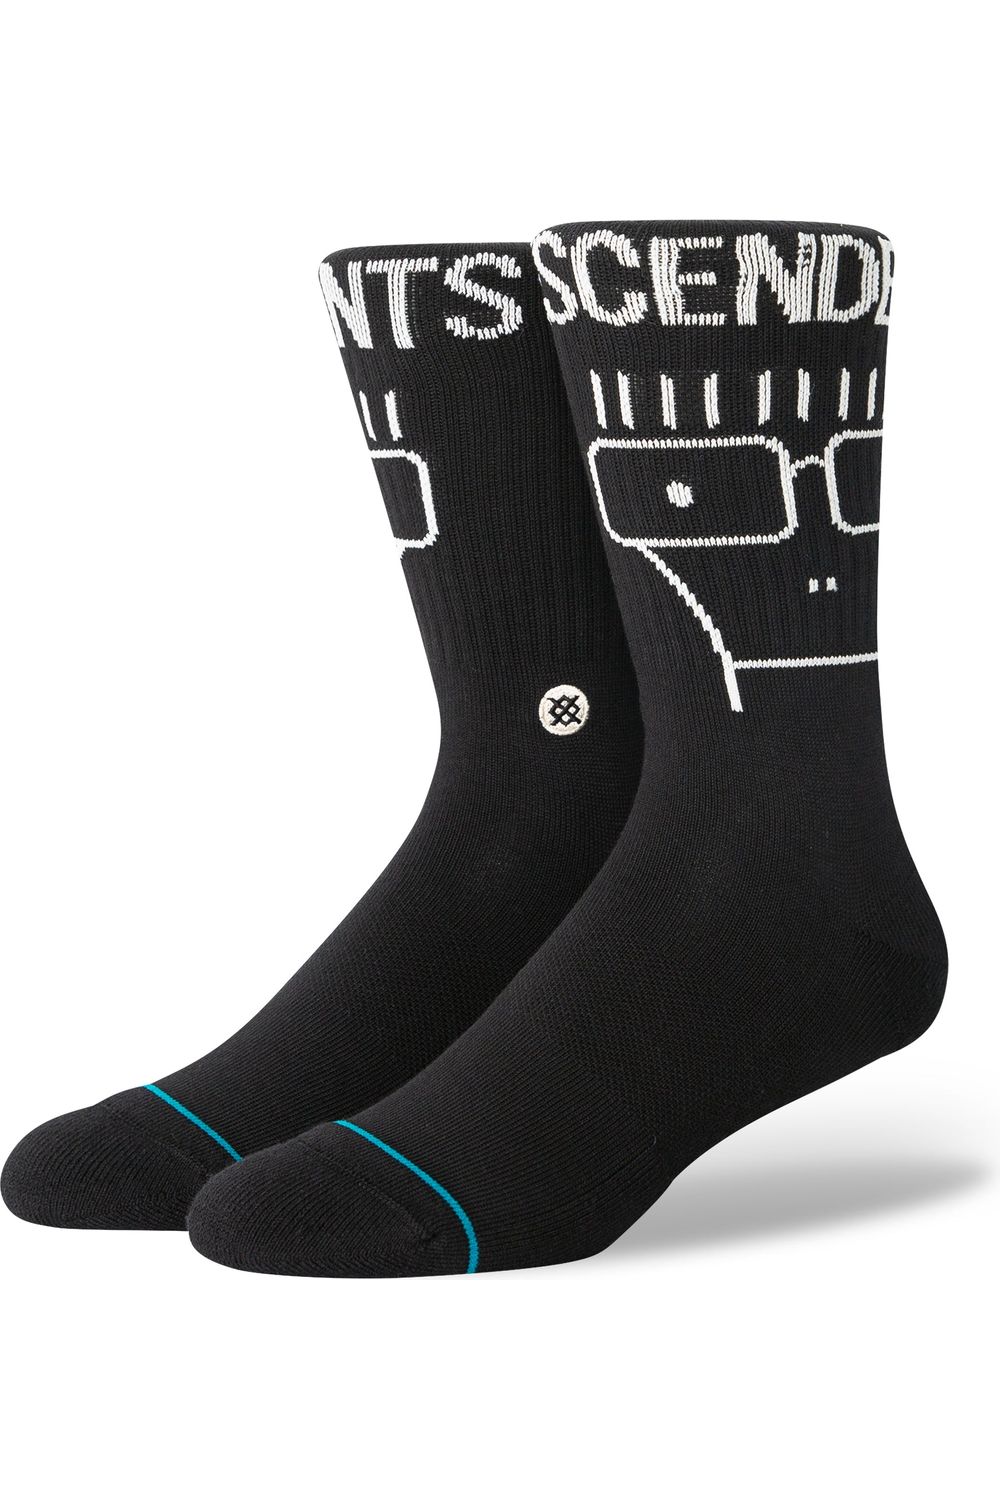 Stance Descendents Crew Socks